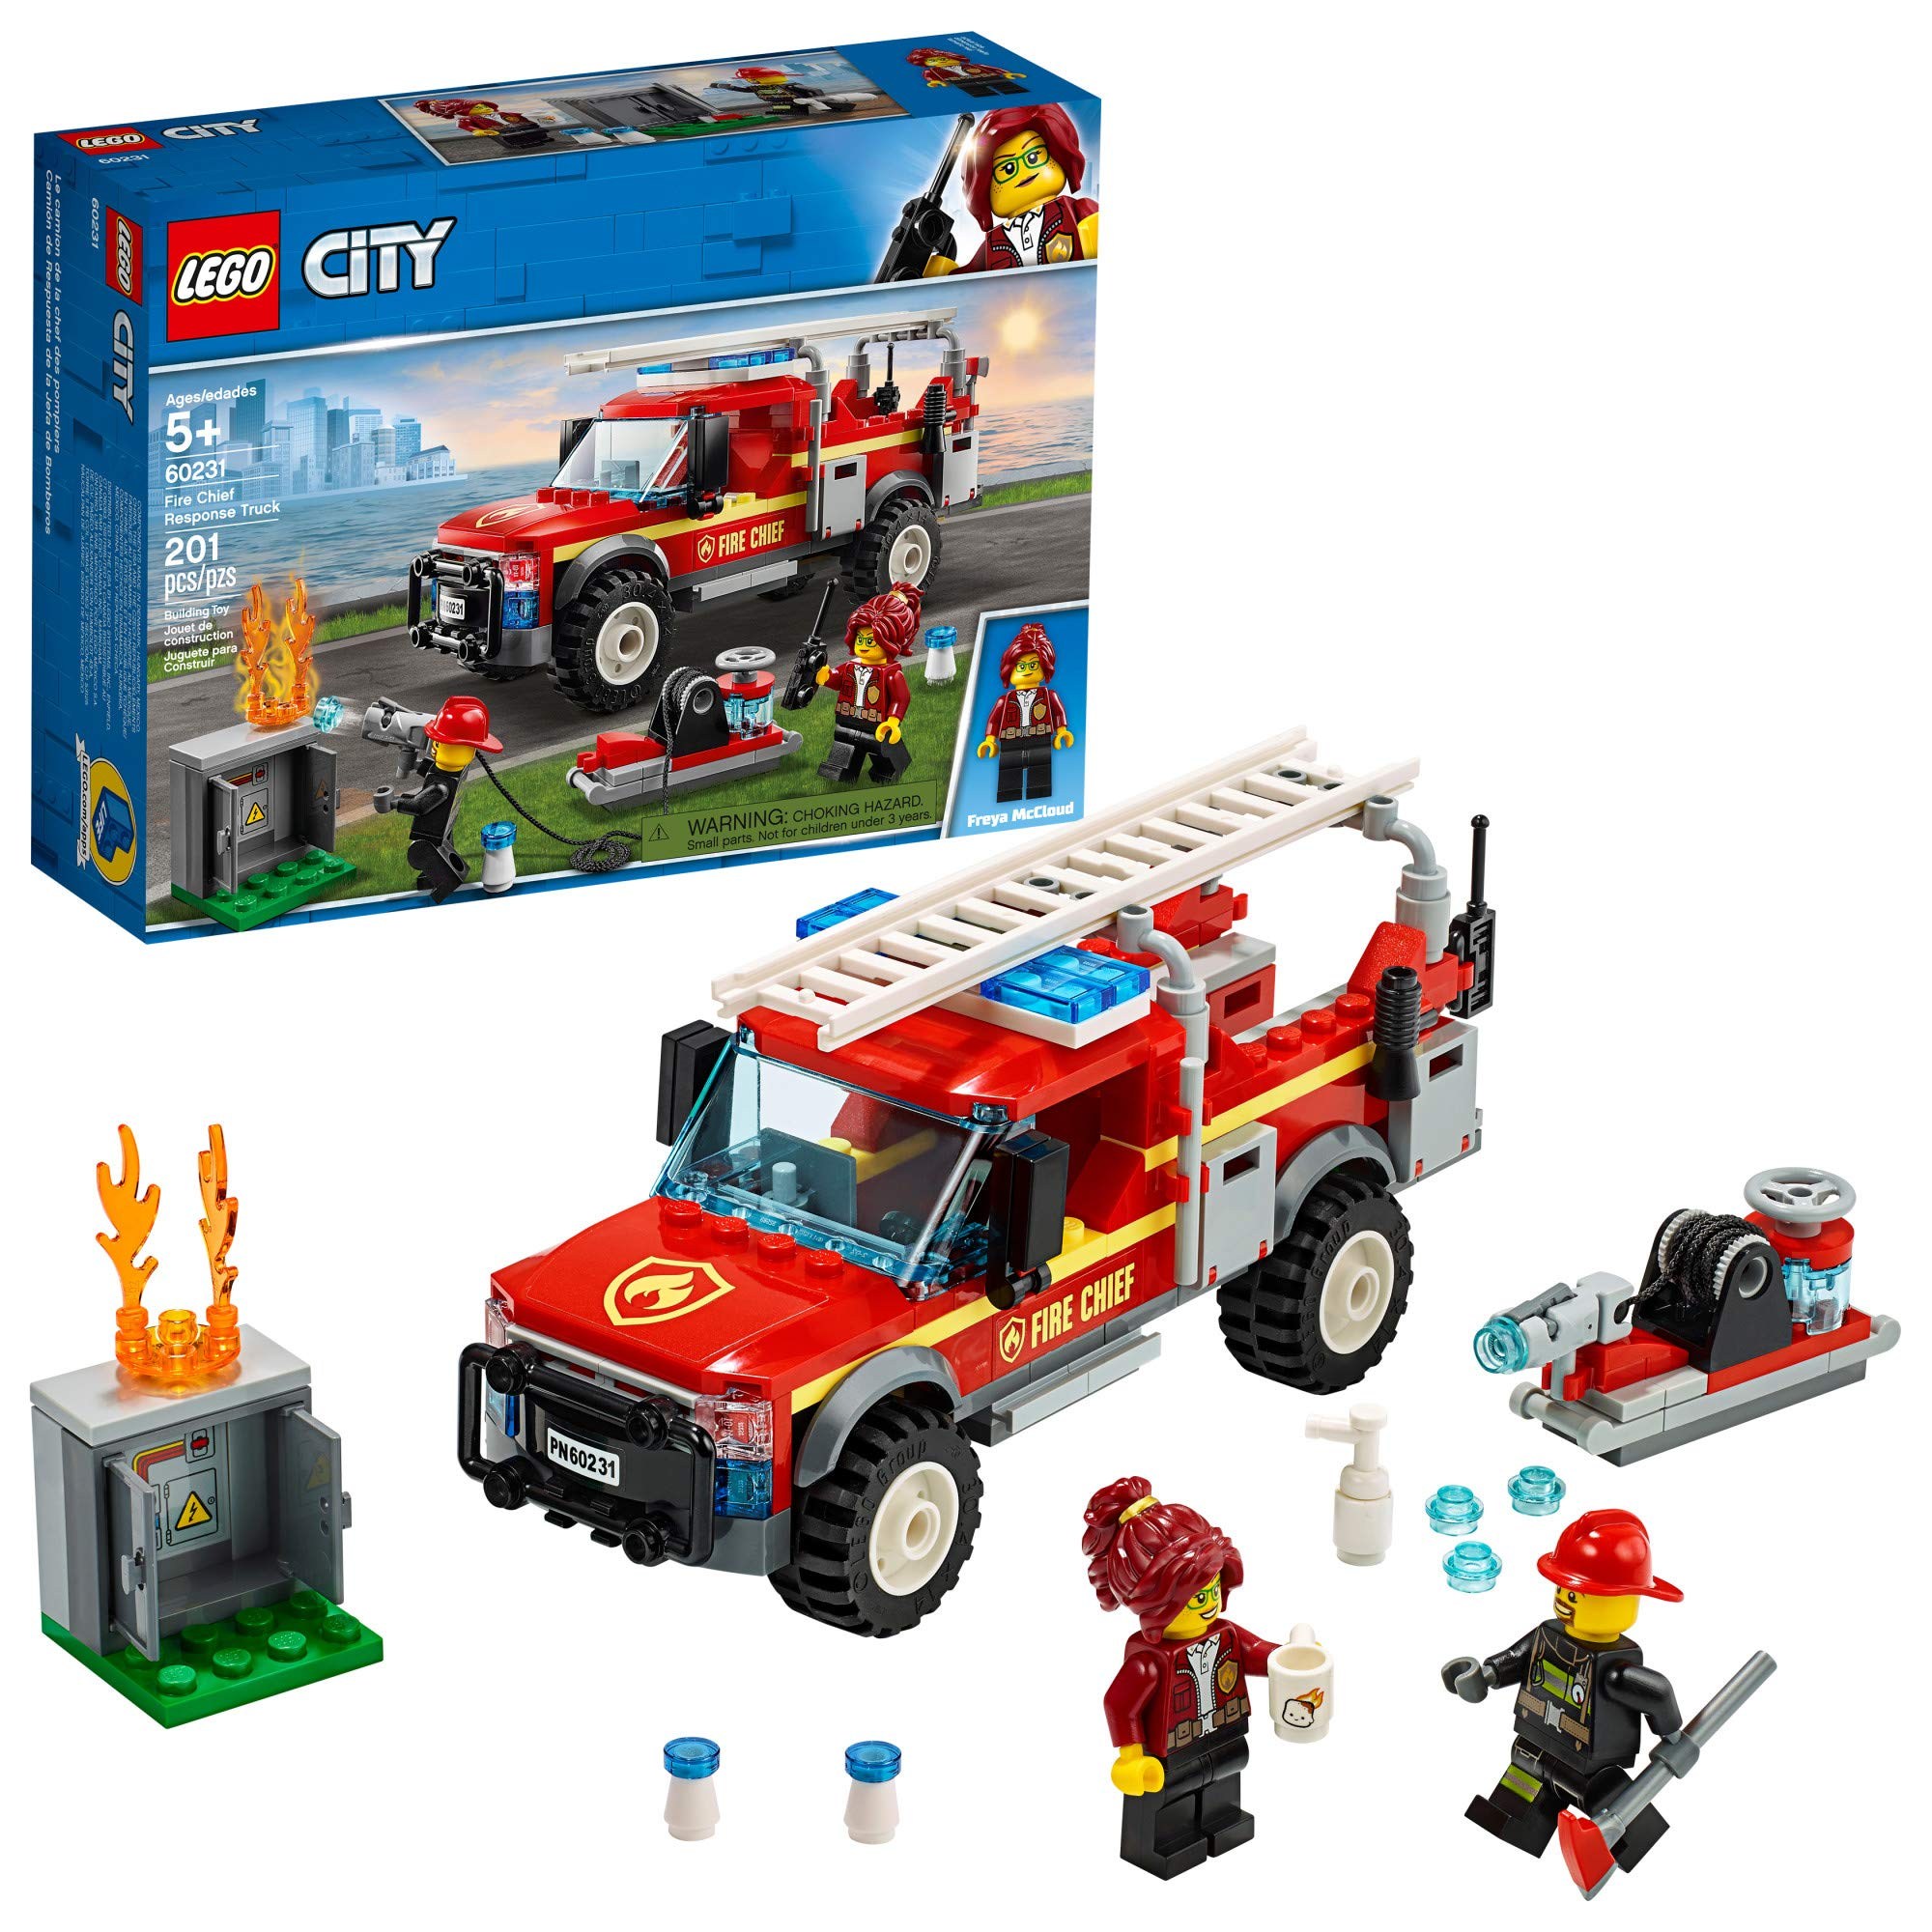 LEGO City Fire Chief Response Truck 60231 Building Kit New 2019 (201 Piece, 본품선택 